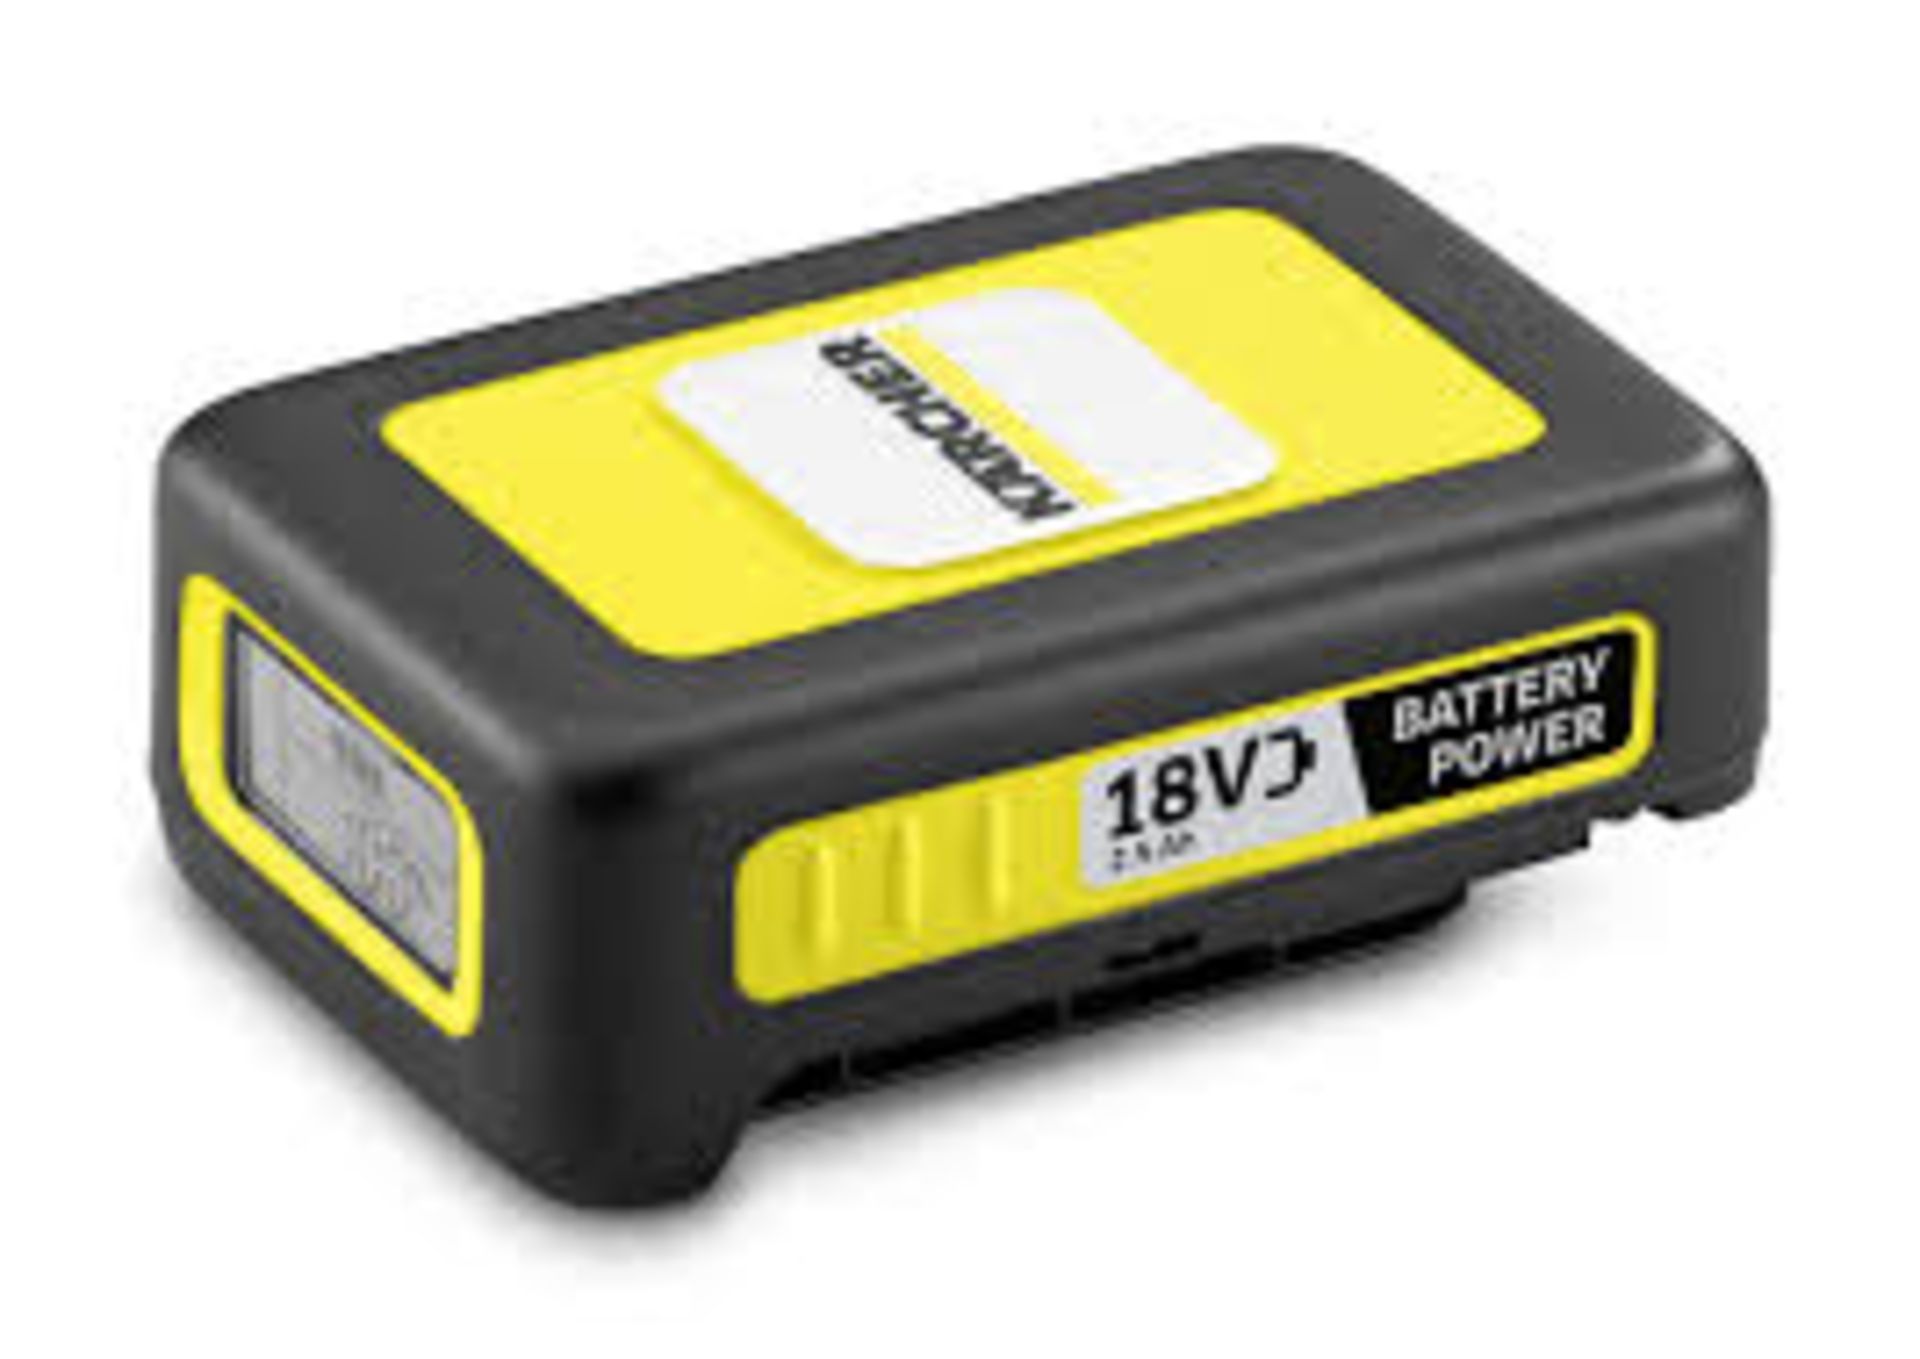 Kärcher 18 V / 2.5 Ah Rechargeable Battery. -S2.14. RRP £99.00.